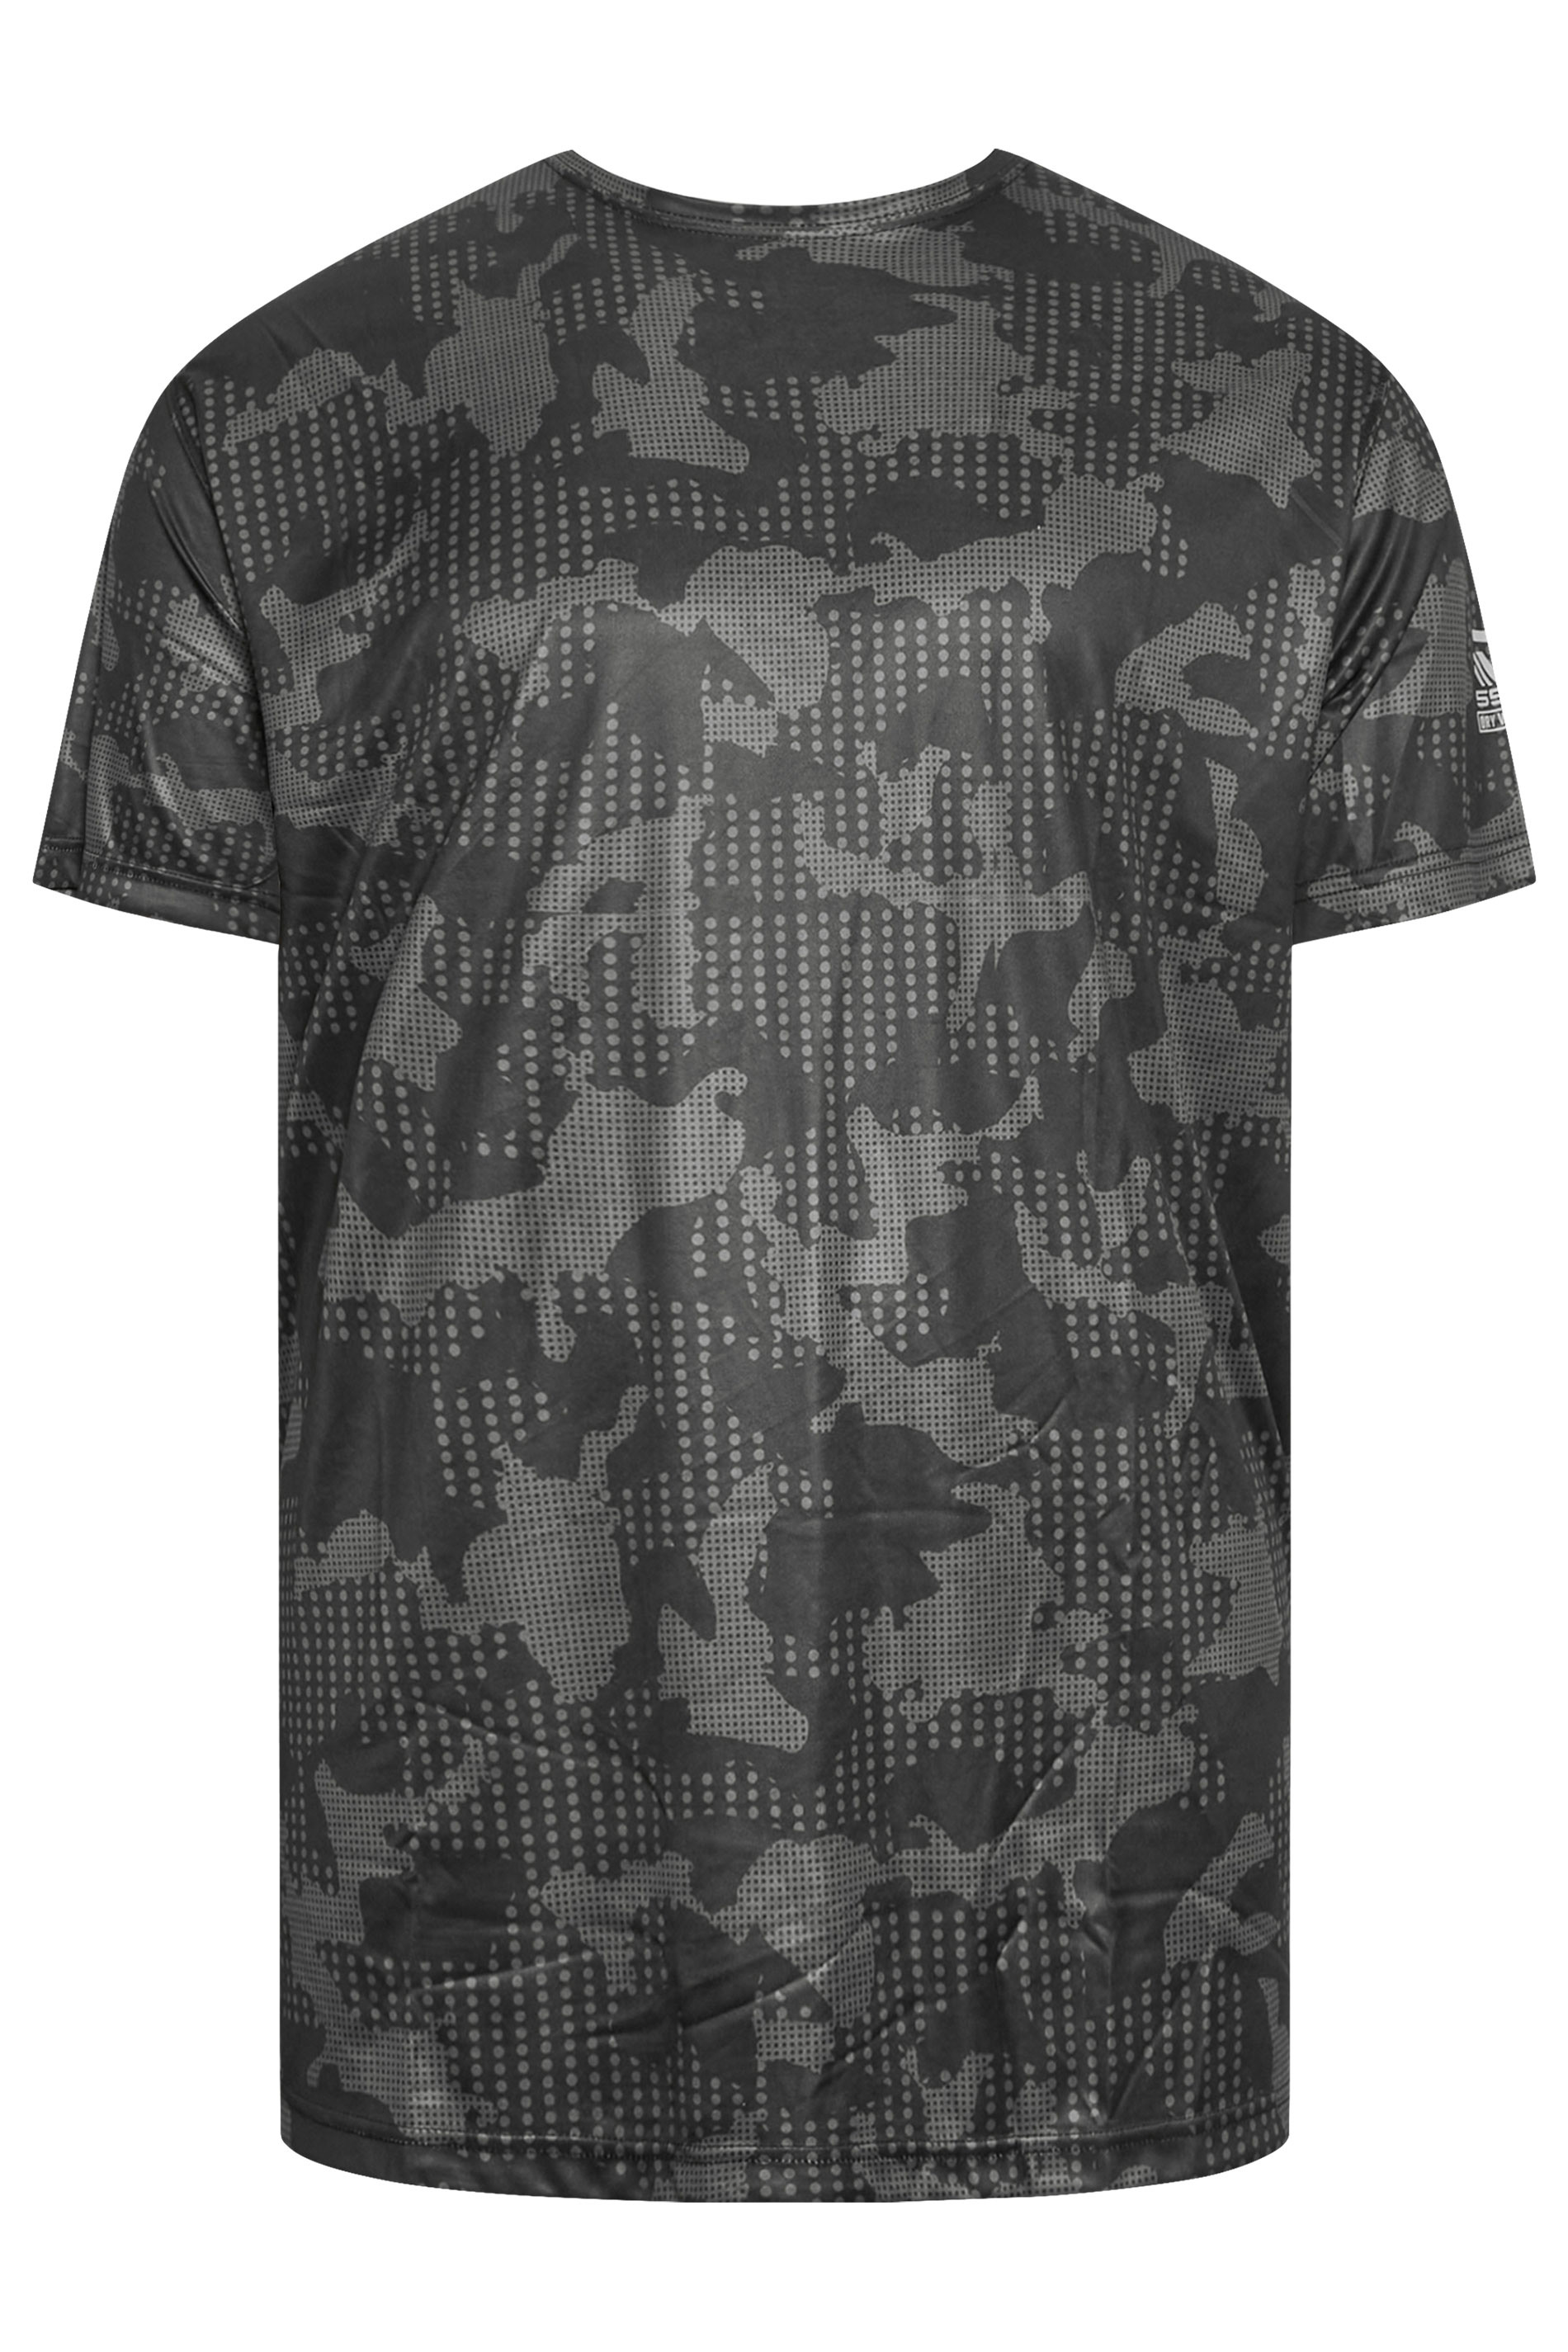 D555 Big & Tall Black Camo Print Dry Wear T-Shirt | Bad Rhino 3